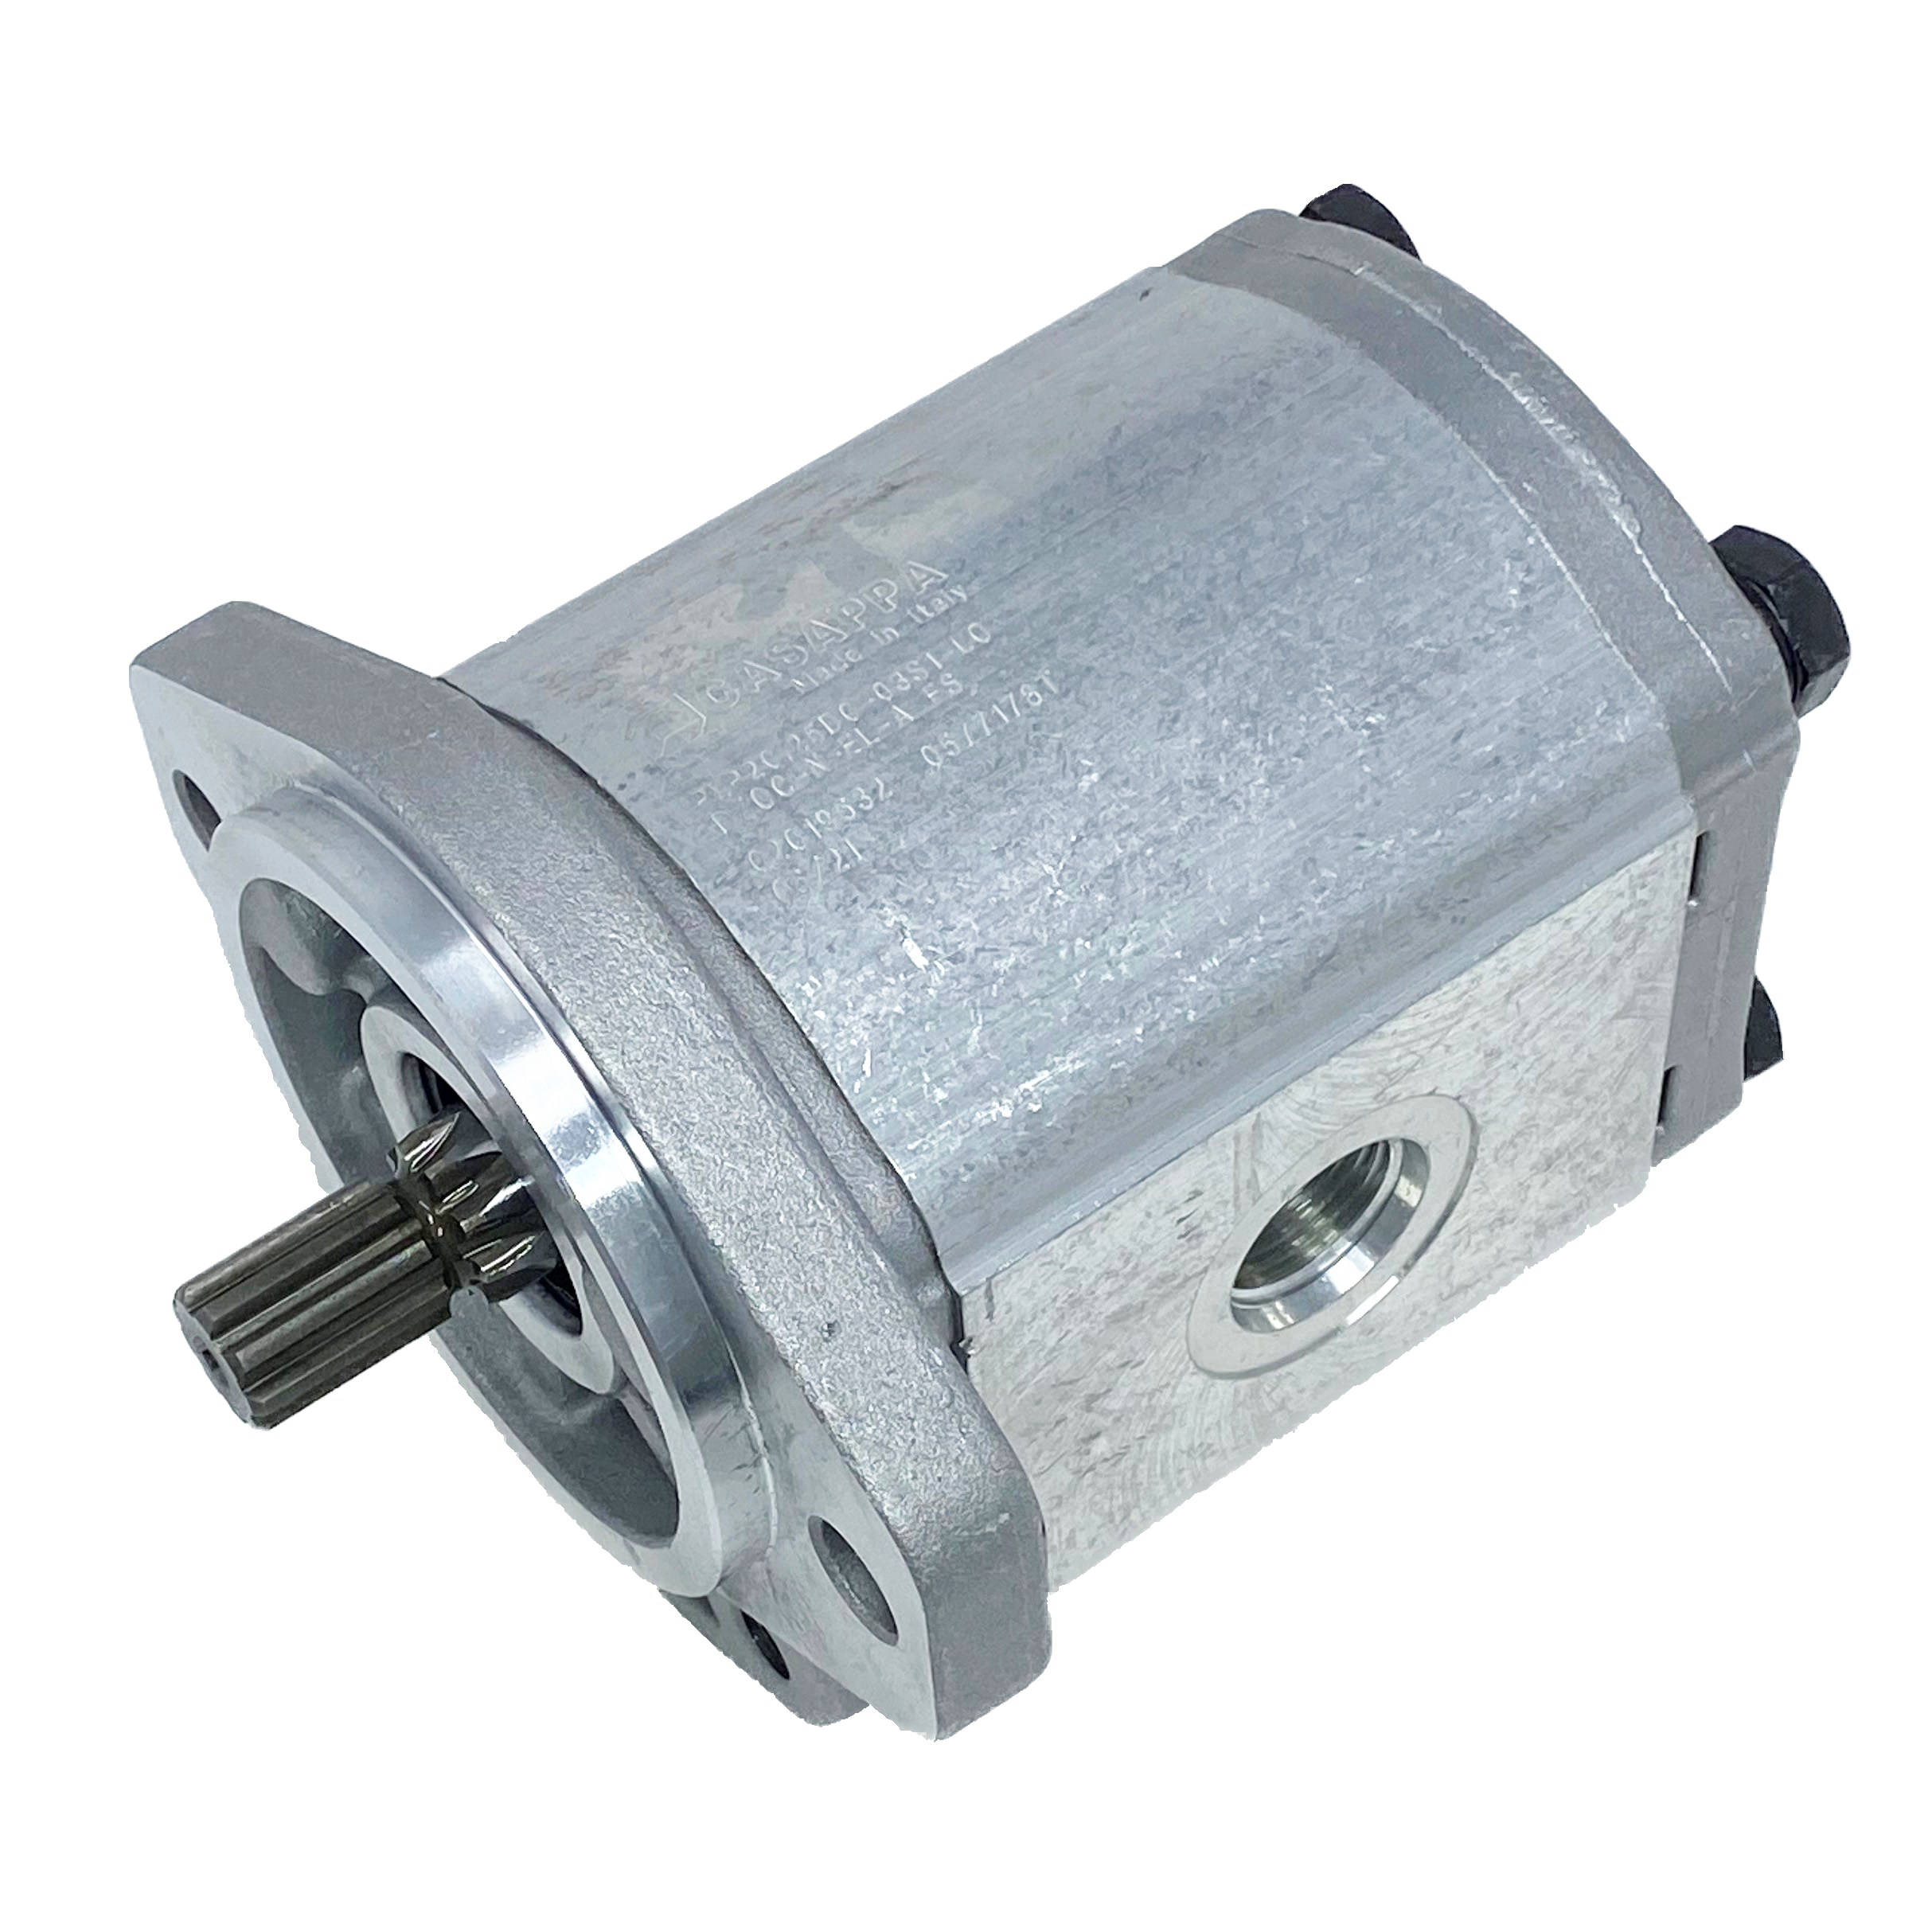 PHM20.27,8R0-03S9-LOC/OG-N-EL : Casappa Polaris Gear Motor, 28.21cc, 2900psi Rated, 2500RPM, Reversible Rear External Drain, 9T 16/32dp Shaft, SAE A 2-Bolt Flange, 0.625 (5/8") #10 SAE Inlet, 1.25" #20 SAE Outlet, Cast Iron Body, Aluminum Flange